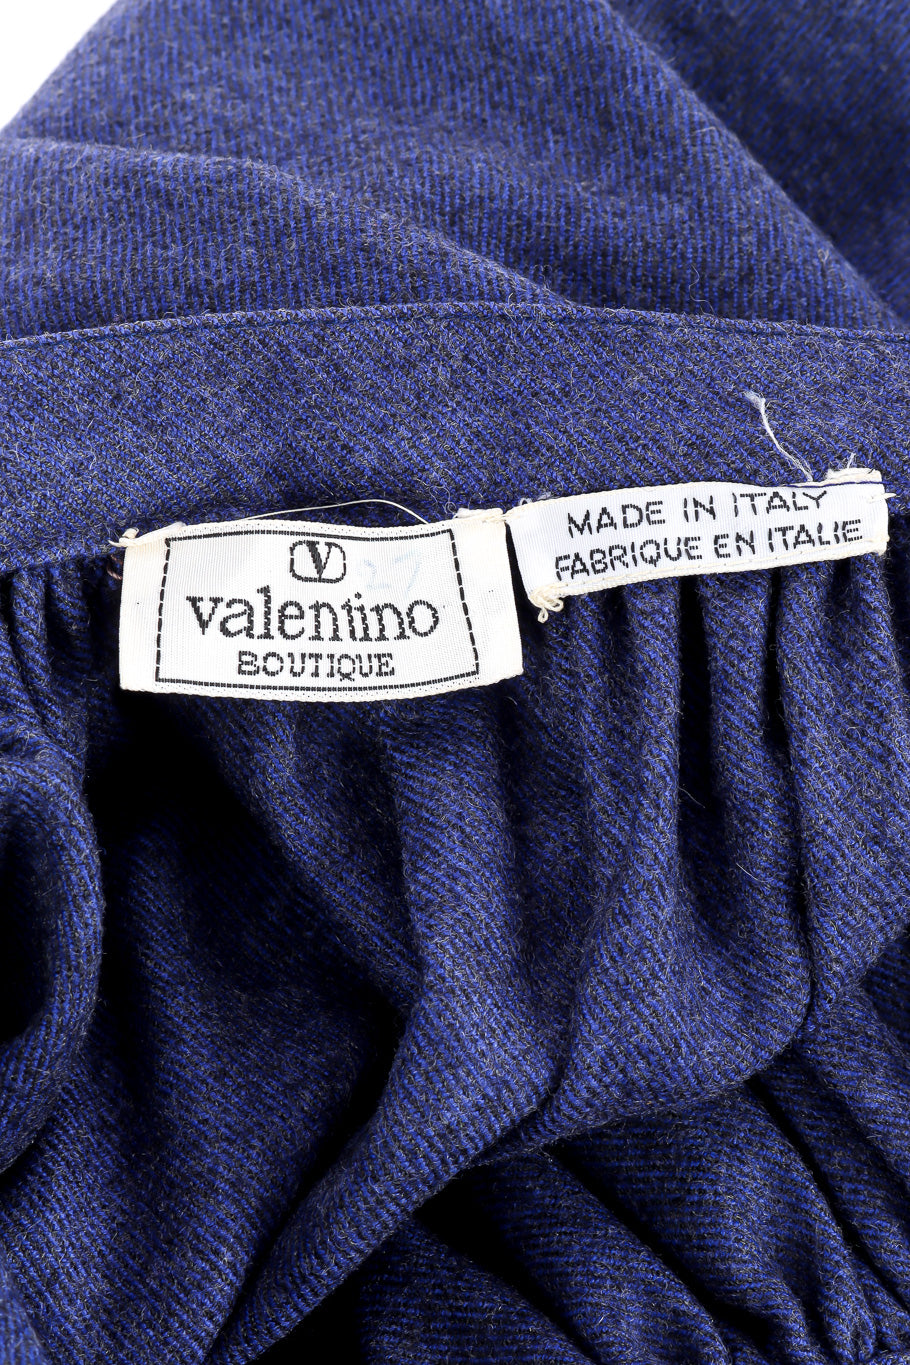 Valentino Boutique cotton denim top and skirt set designer label on skirt @recessla